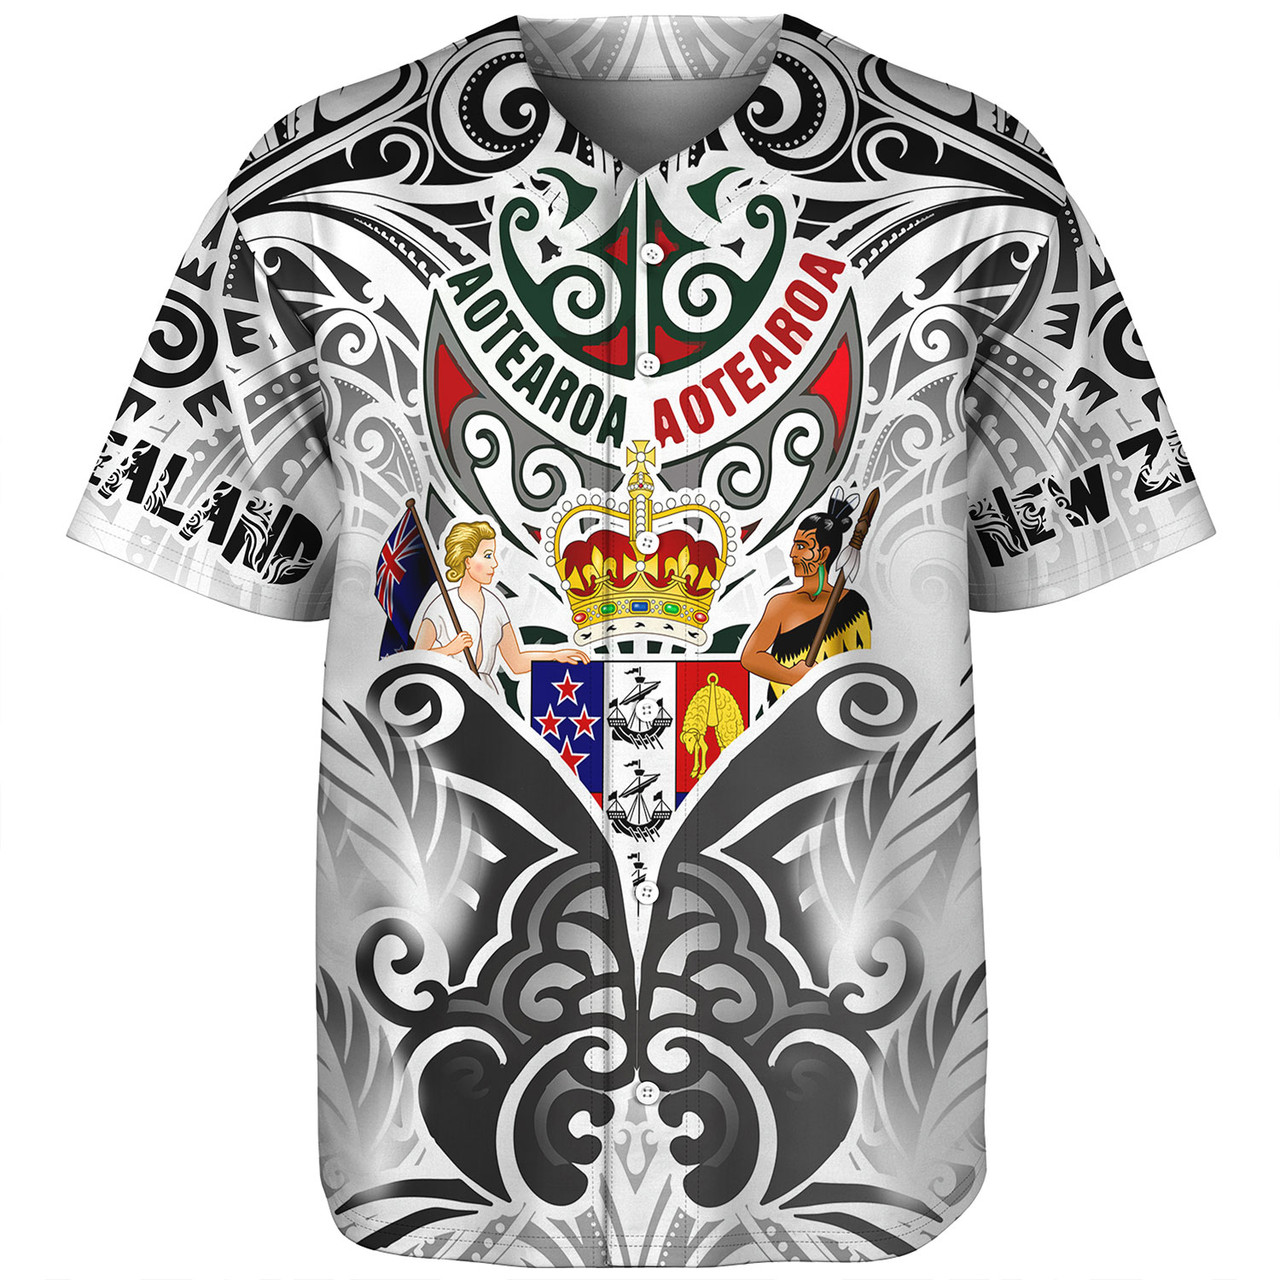 New Zealand Aotearoa Baseball Shirt Maori Traditional Hongi - The Breath Of Life Coat Of Arms Tribal Patterns